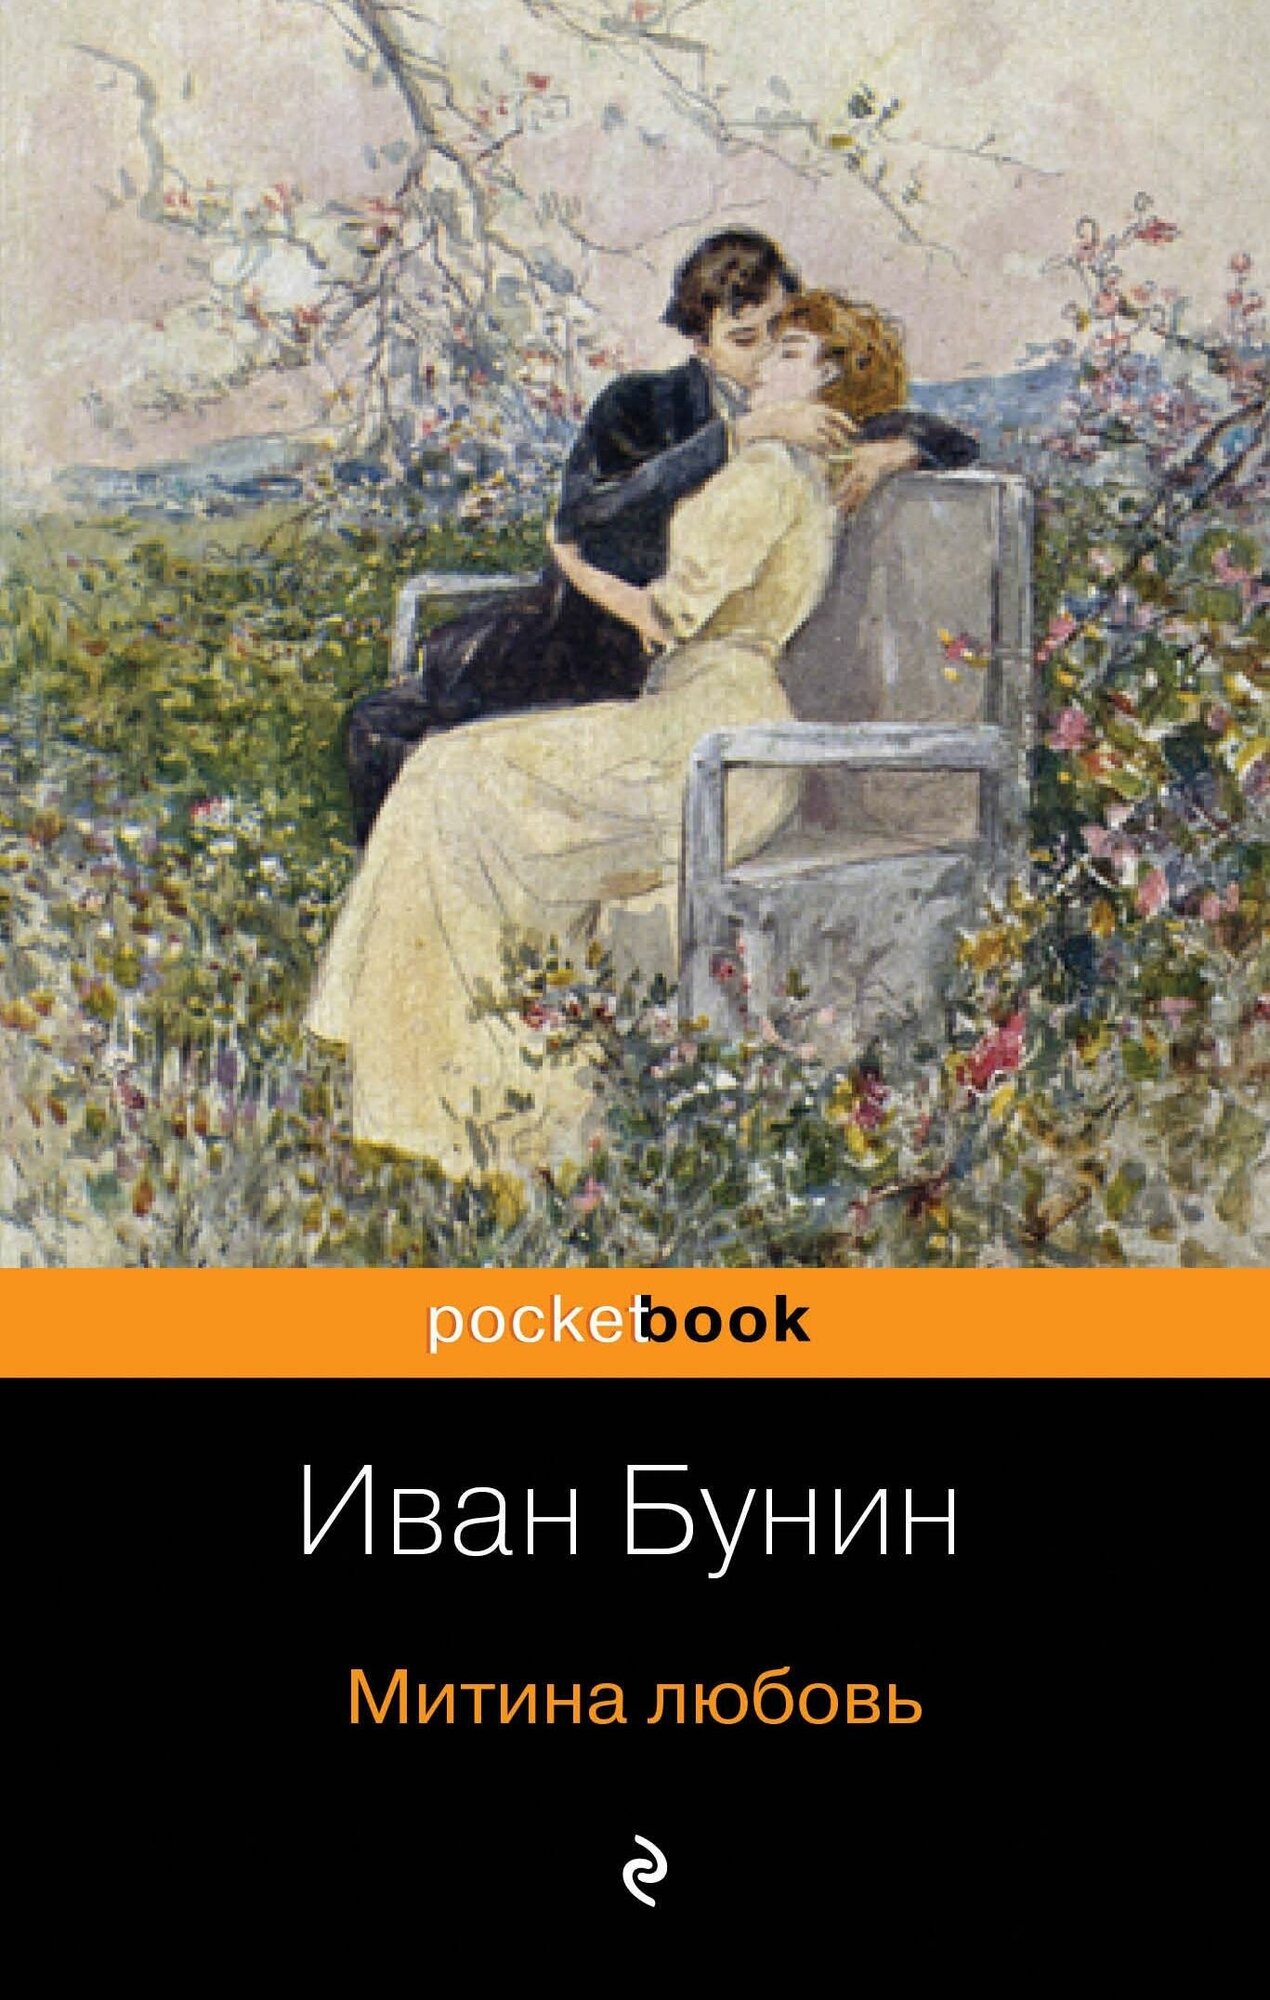 Бунин Иван Алексеевич. Митина любовь. Pocket book (обложка)